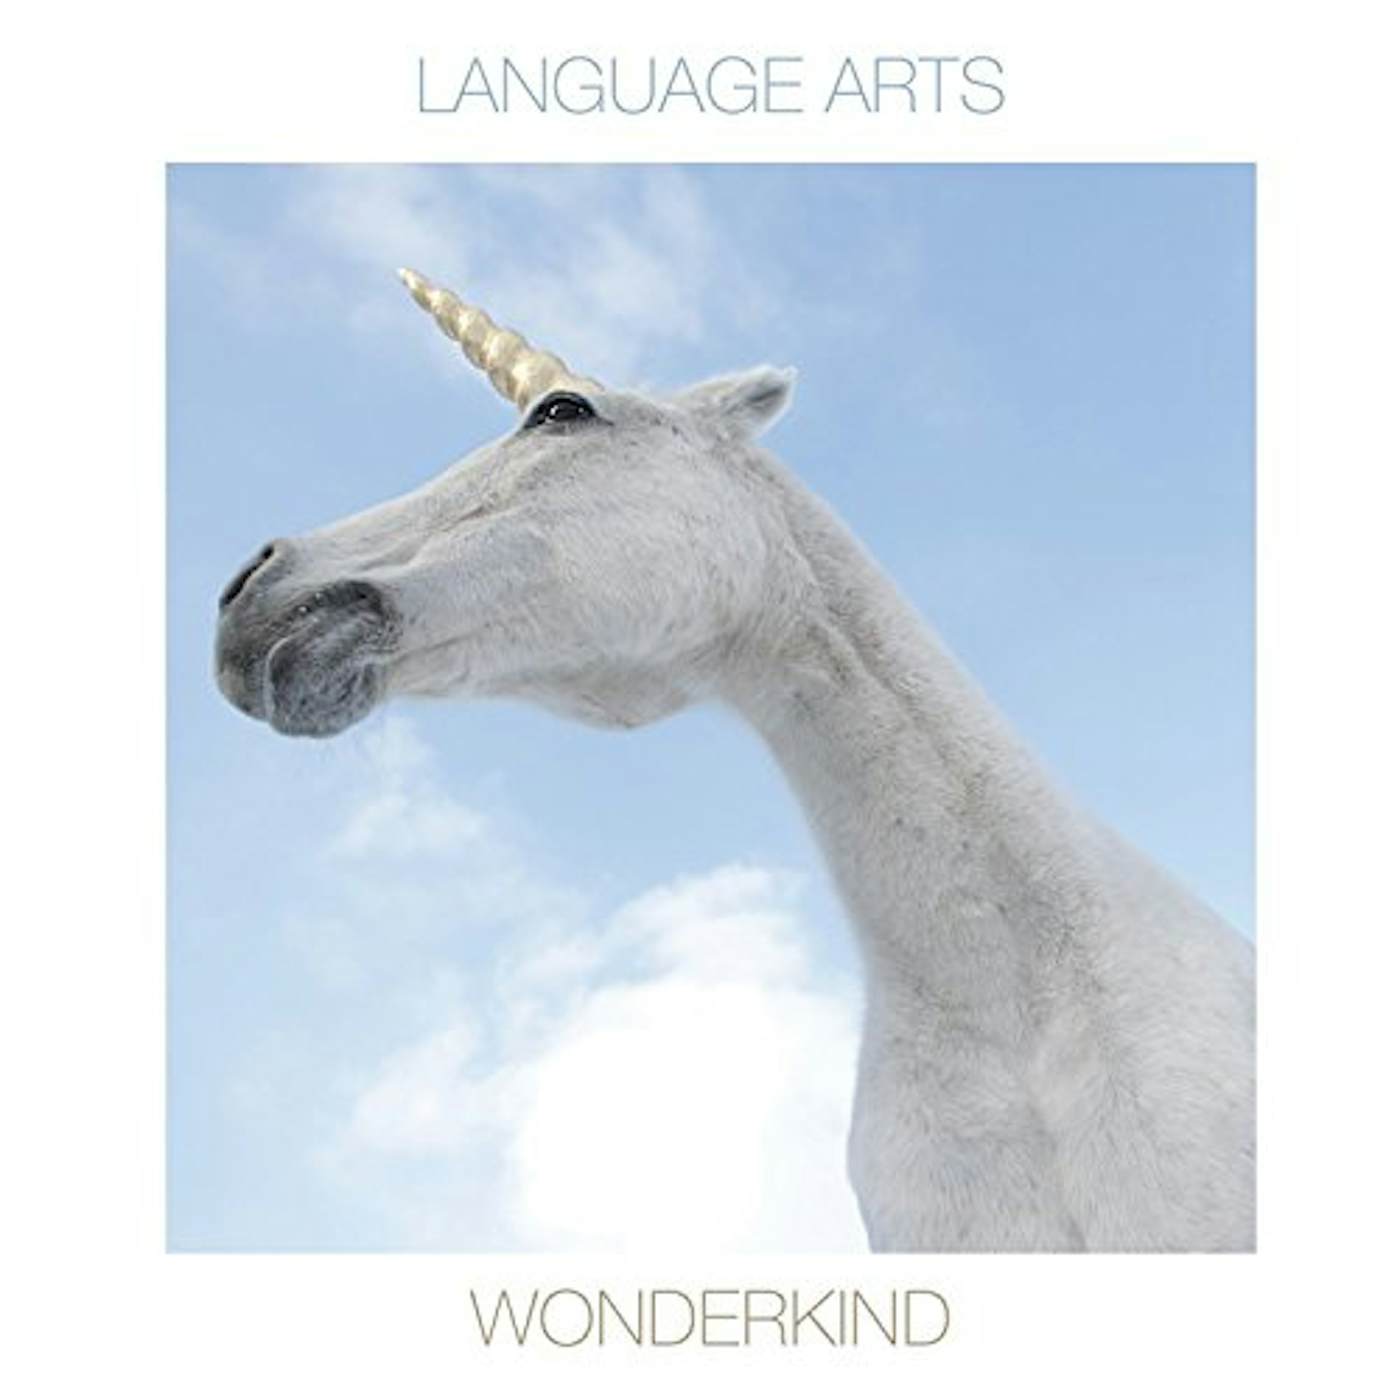 Language Arts Wonderkind Vinyl Record